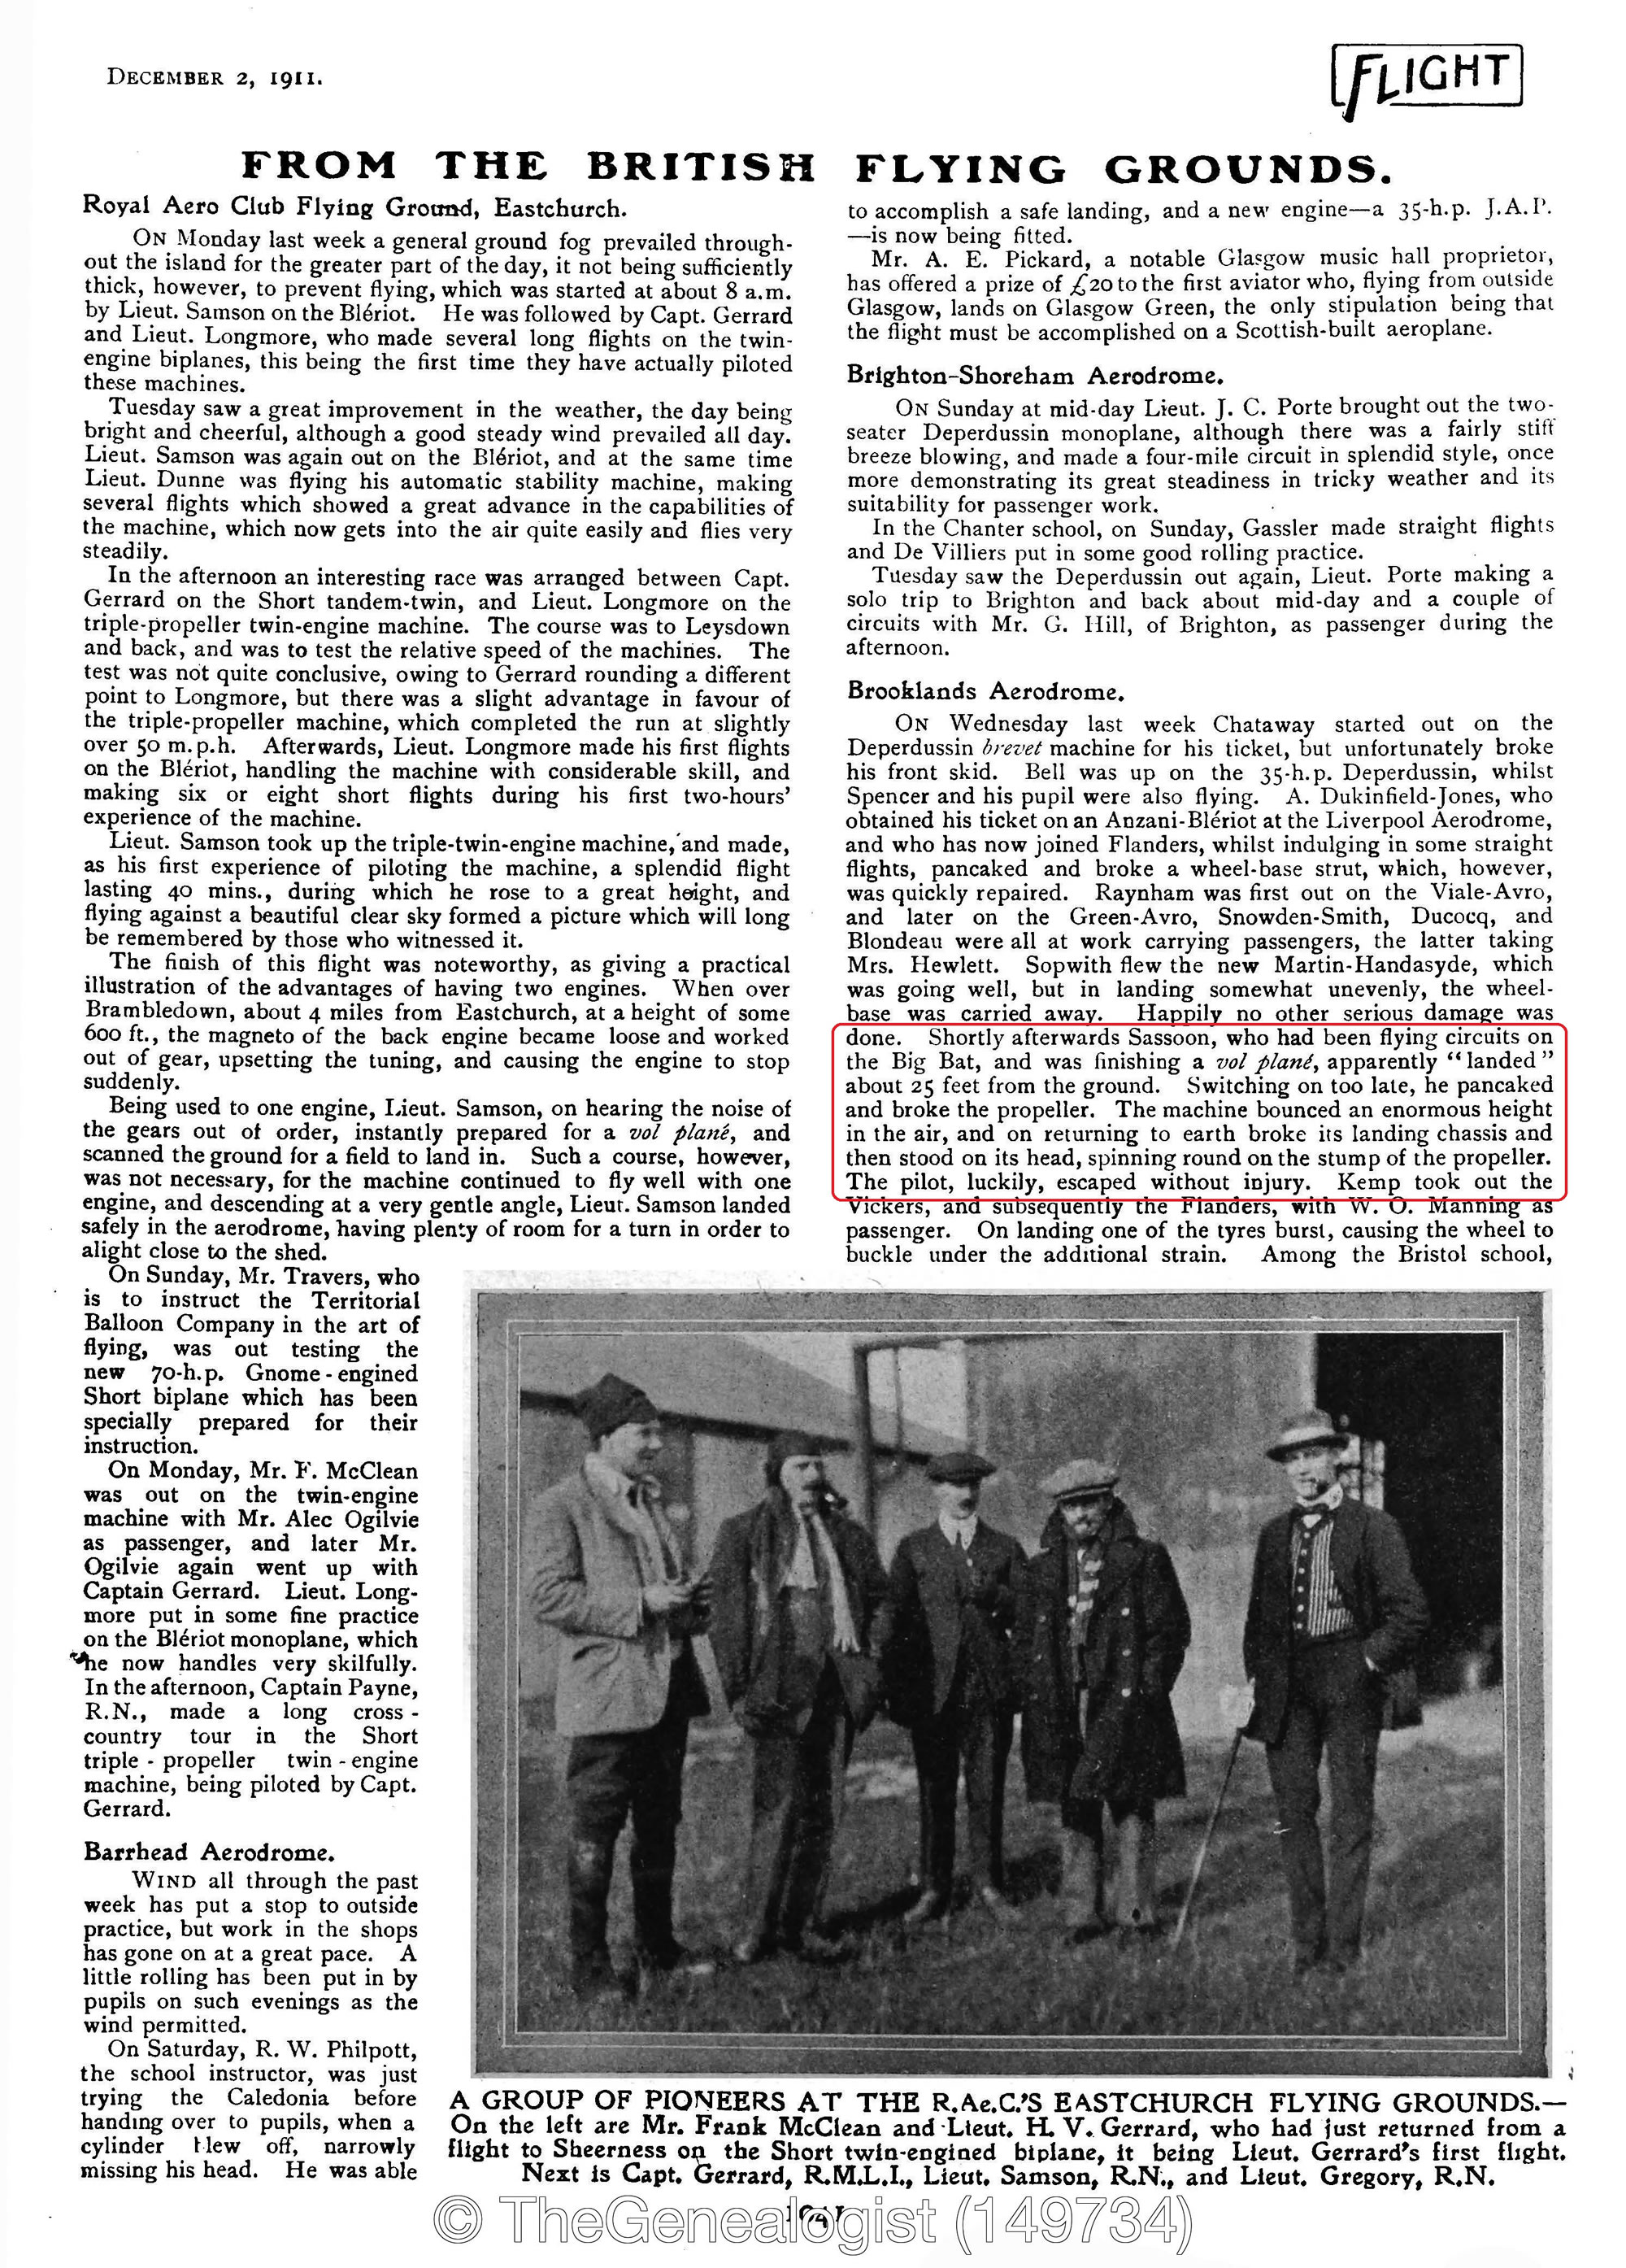 Flight Magazine published December 21 1911 - TheGenealogist's Occupational Records